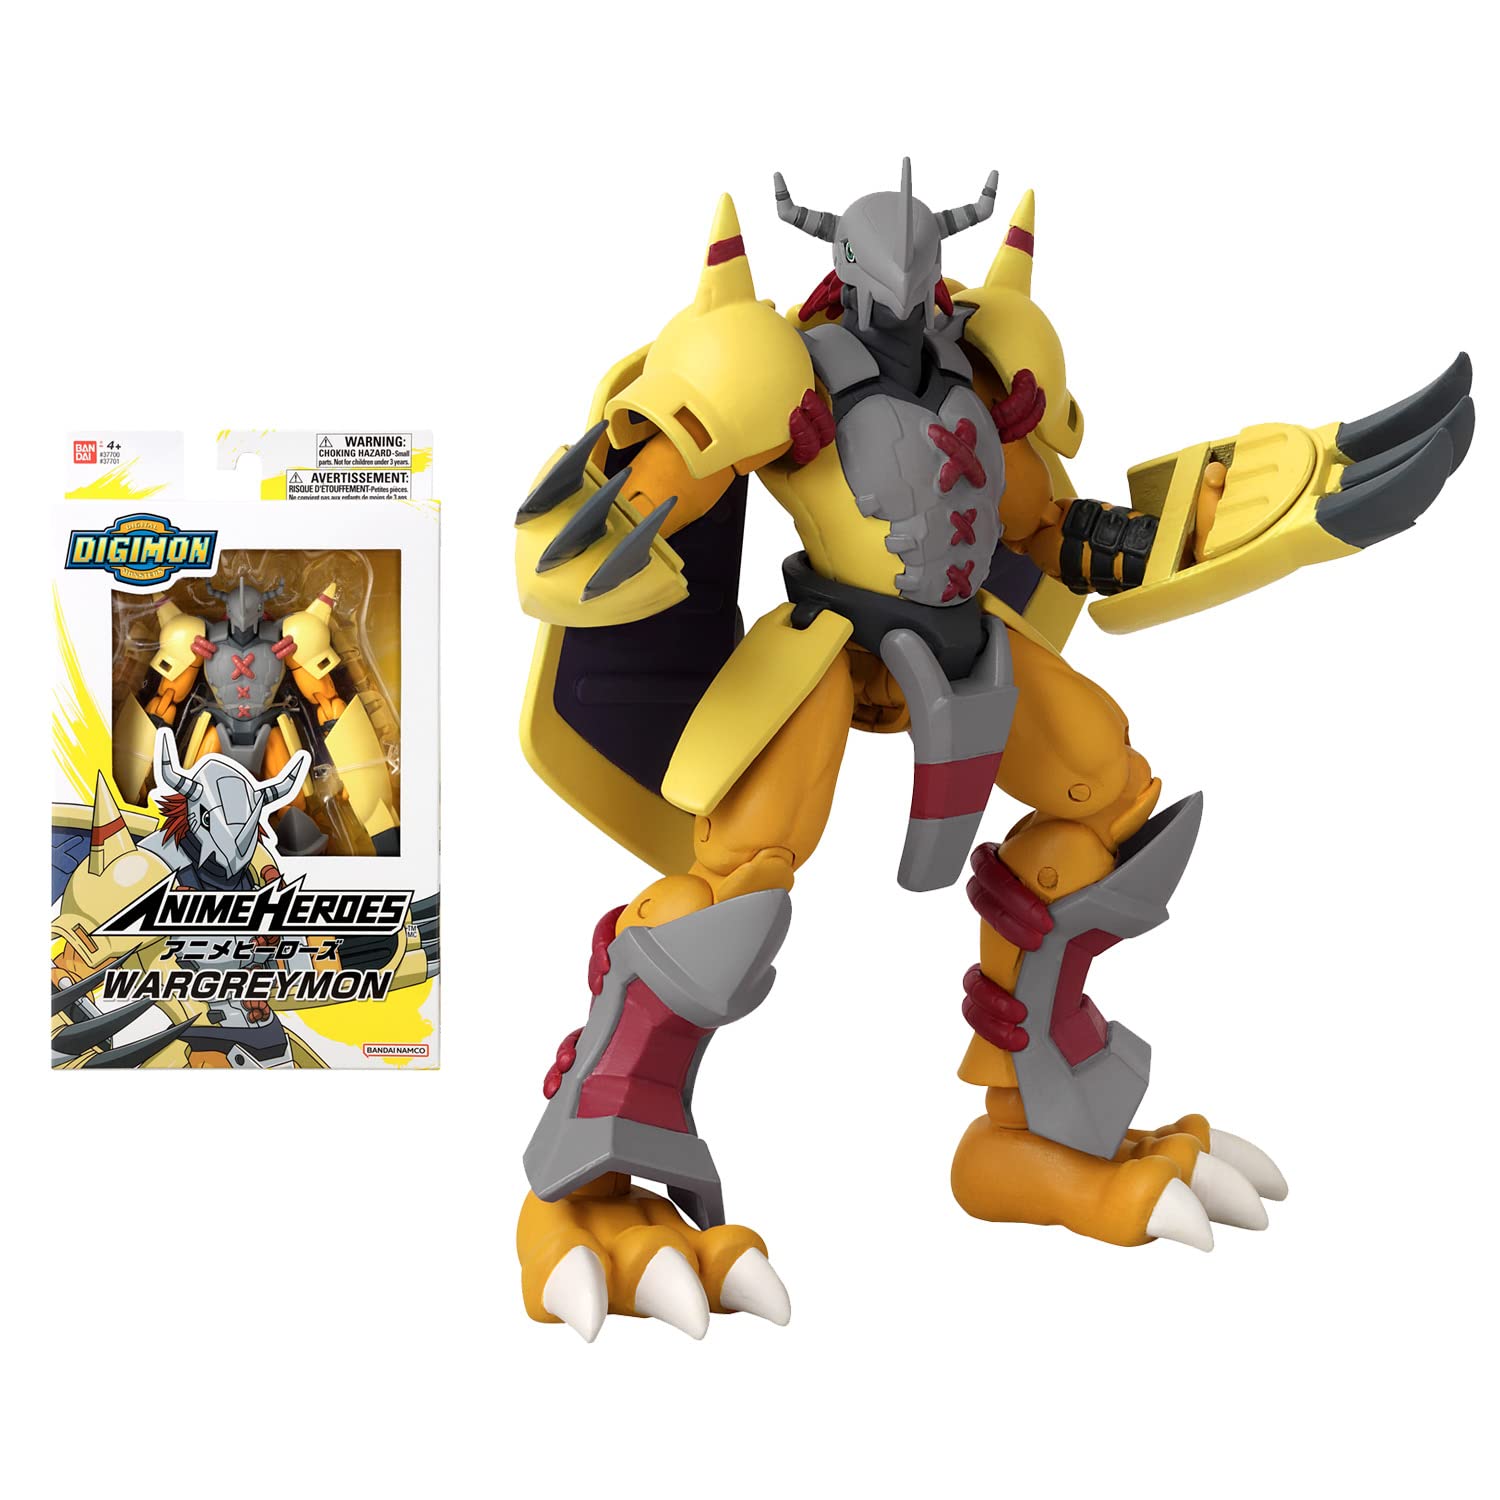 Exclusif Bandai - Anime Heroes - Digimon - Figurine Dig